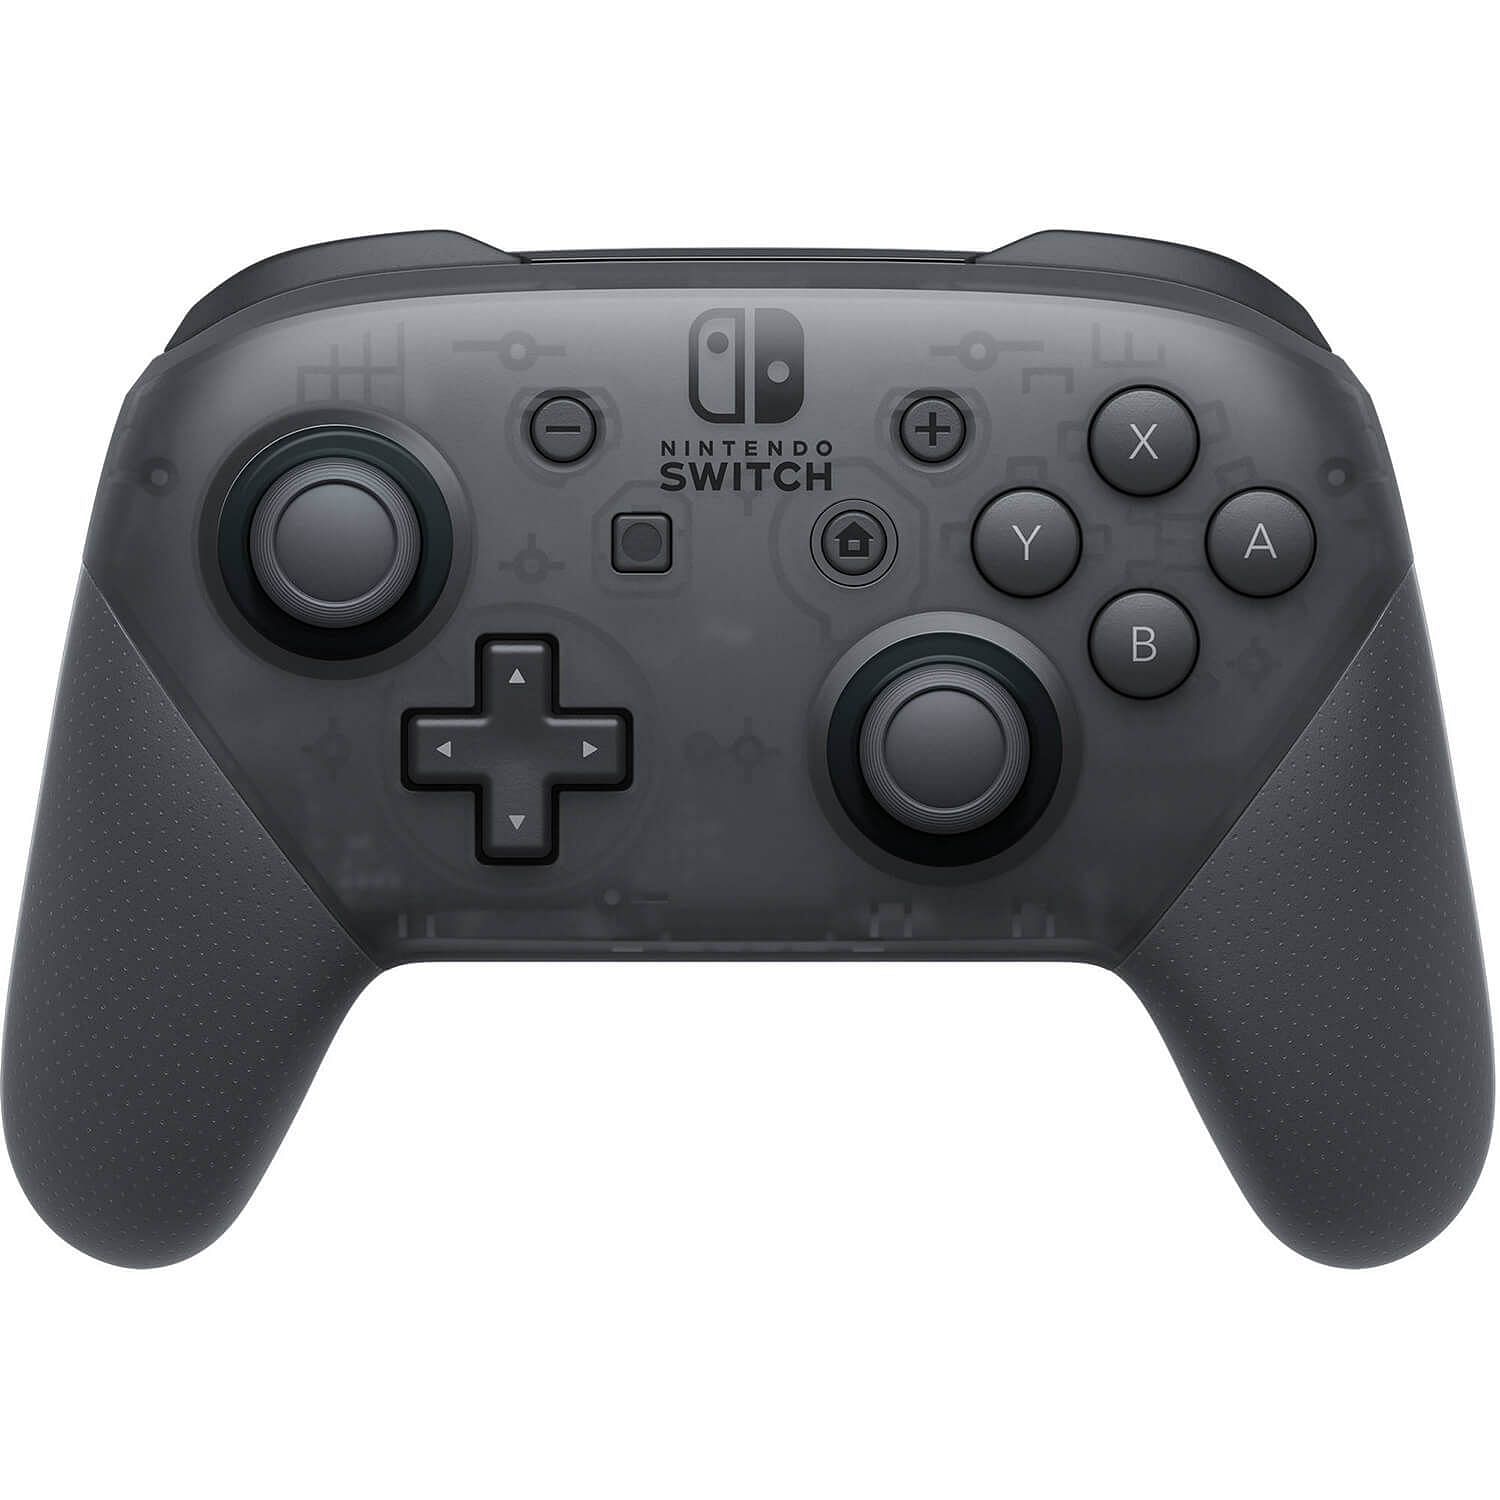 The Nintendo Switch Wireless Pro (Image via Amazon)